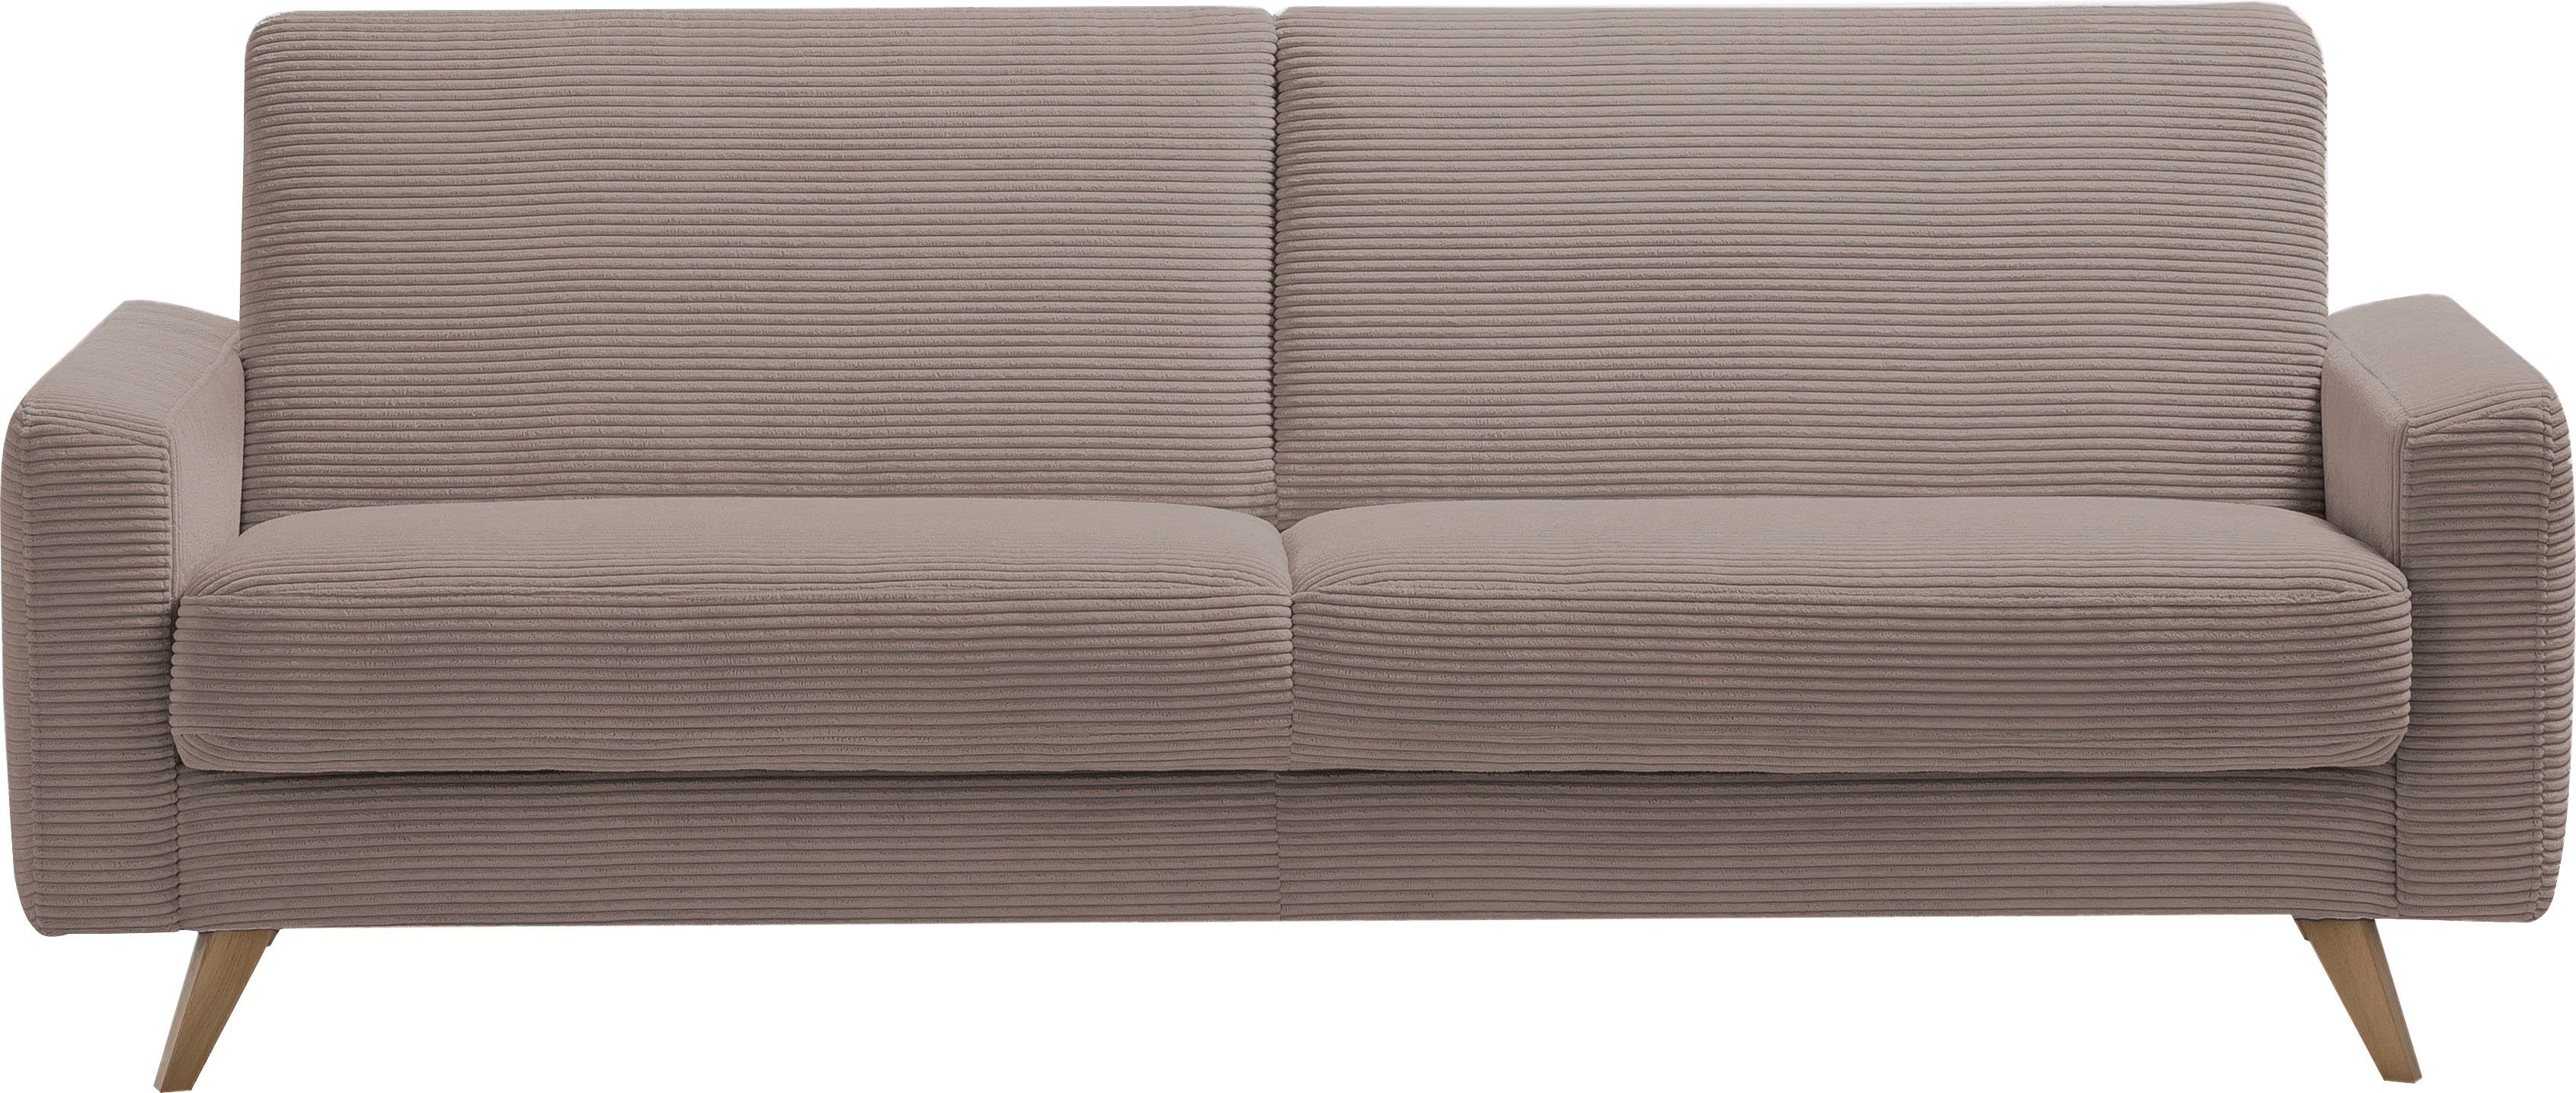 Samso, cappucino - sofa Bettkasten exxpo Inklusive 3-Sitzer und fashion Bettfunktion